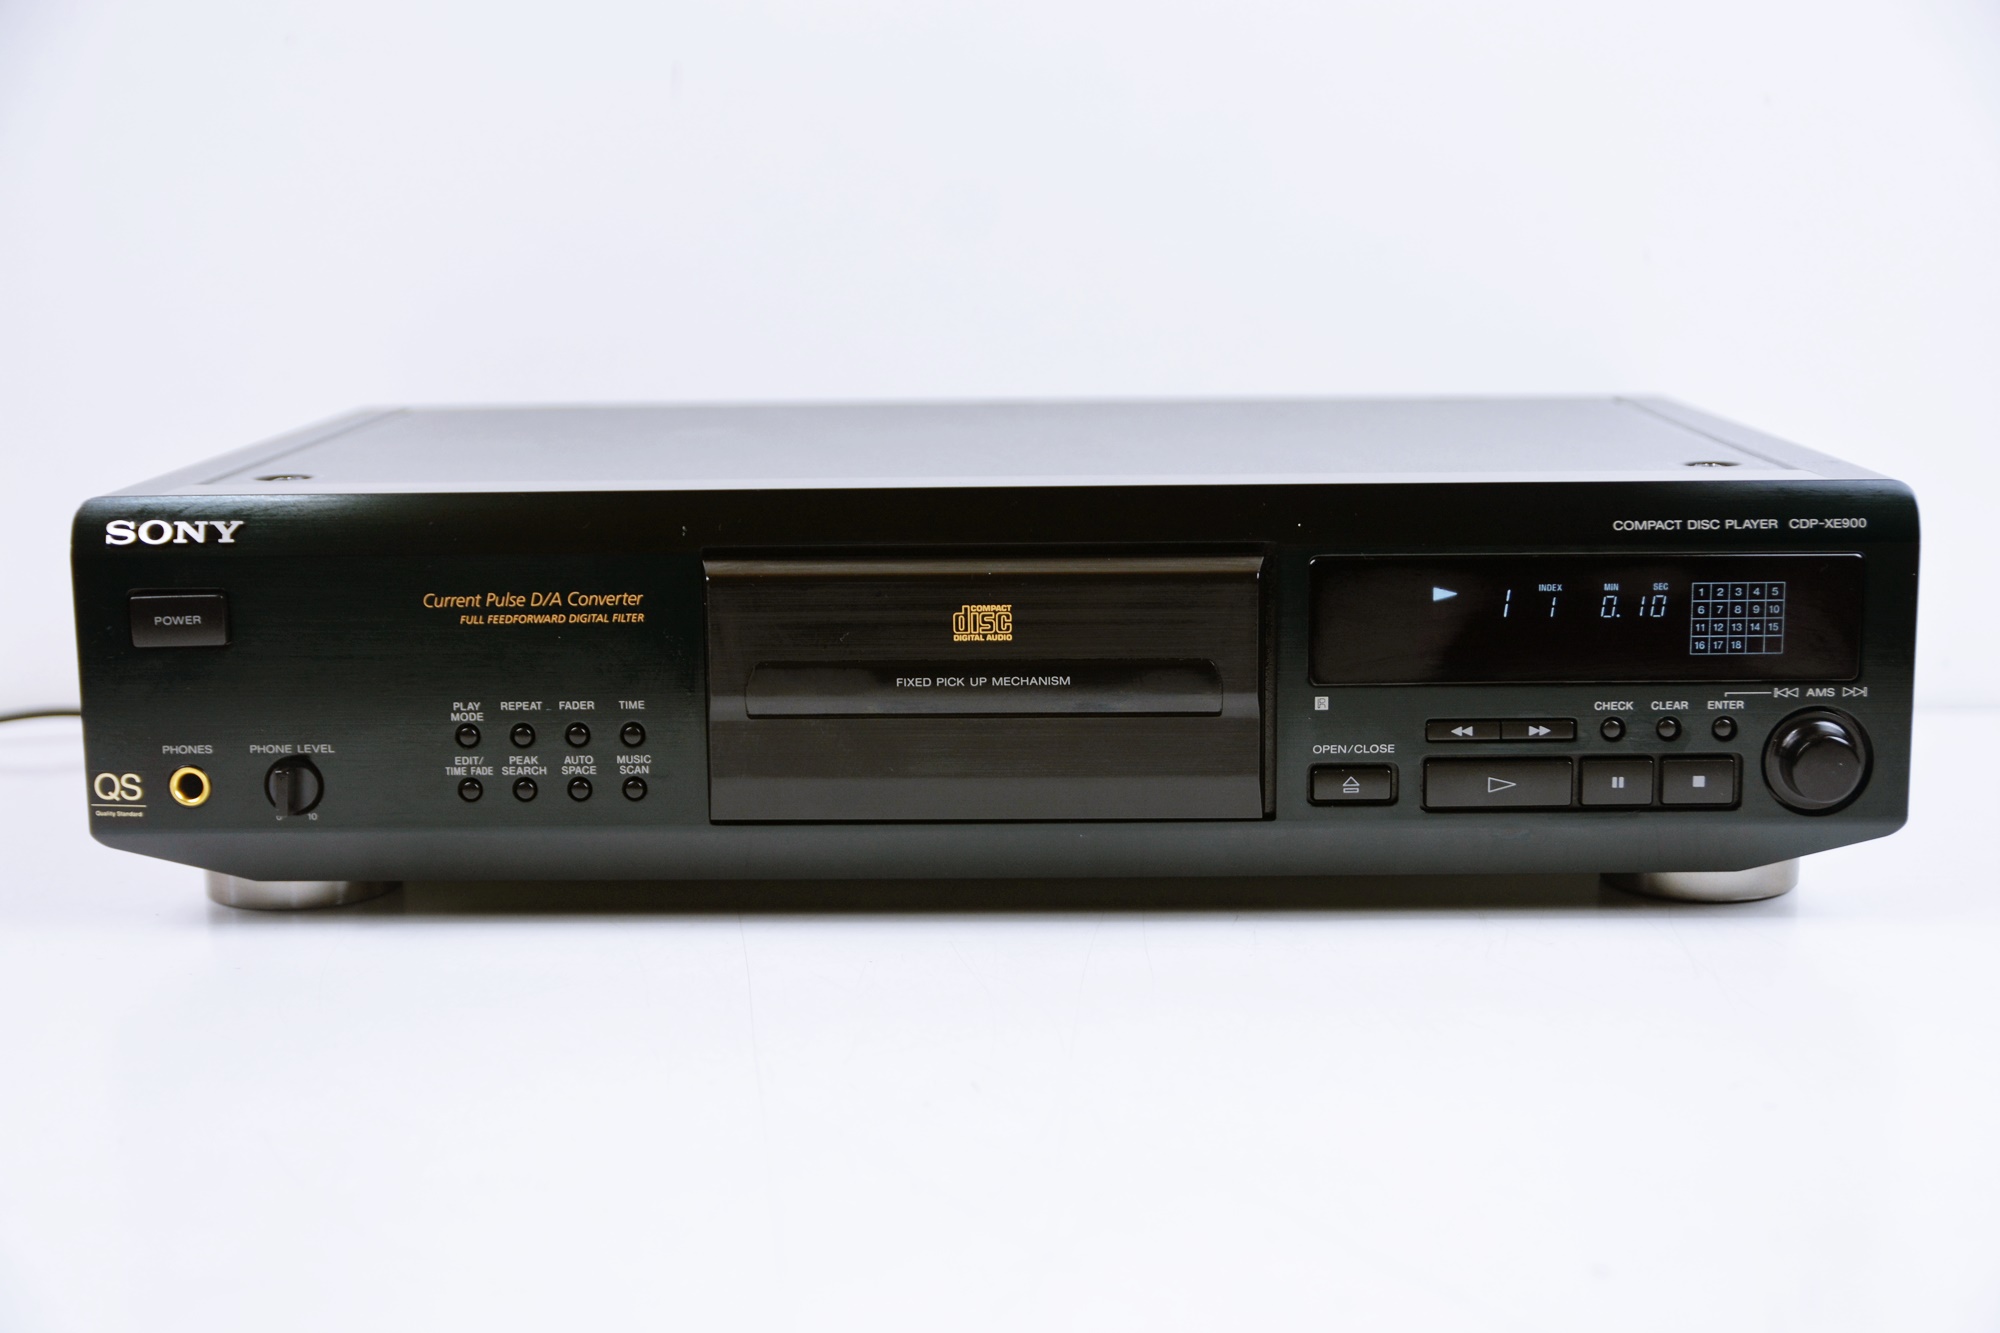 Sony CDP-XE900